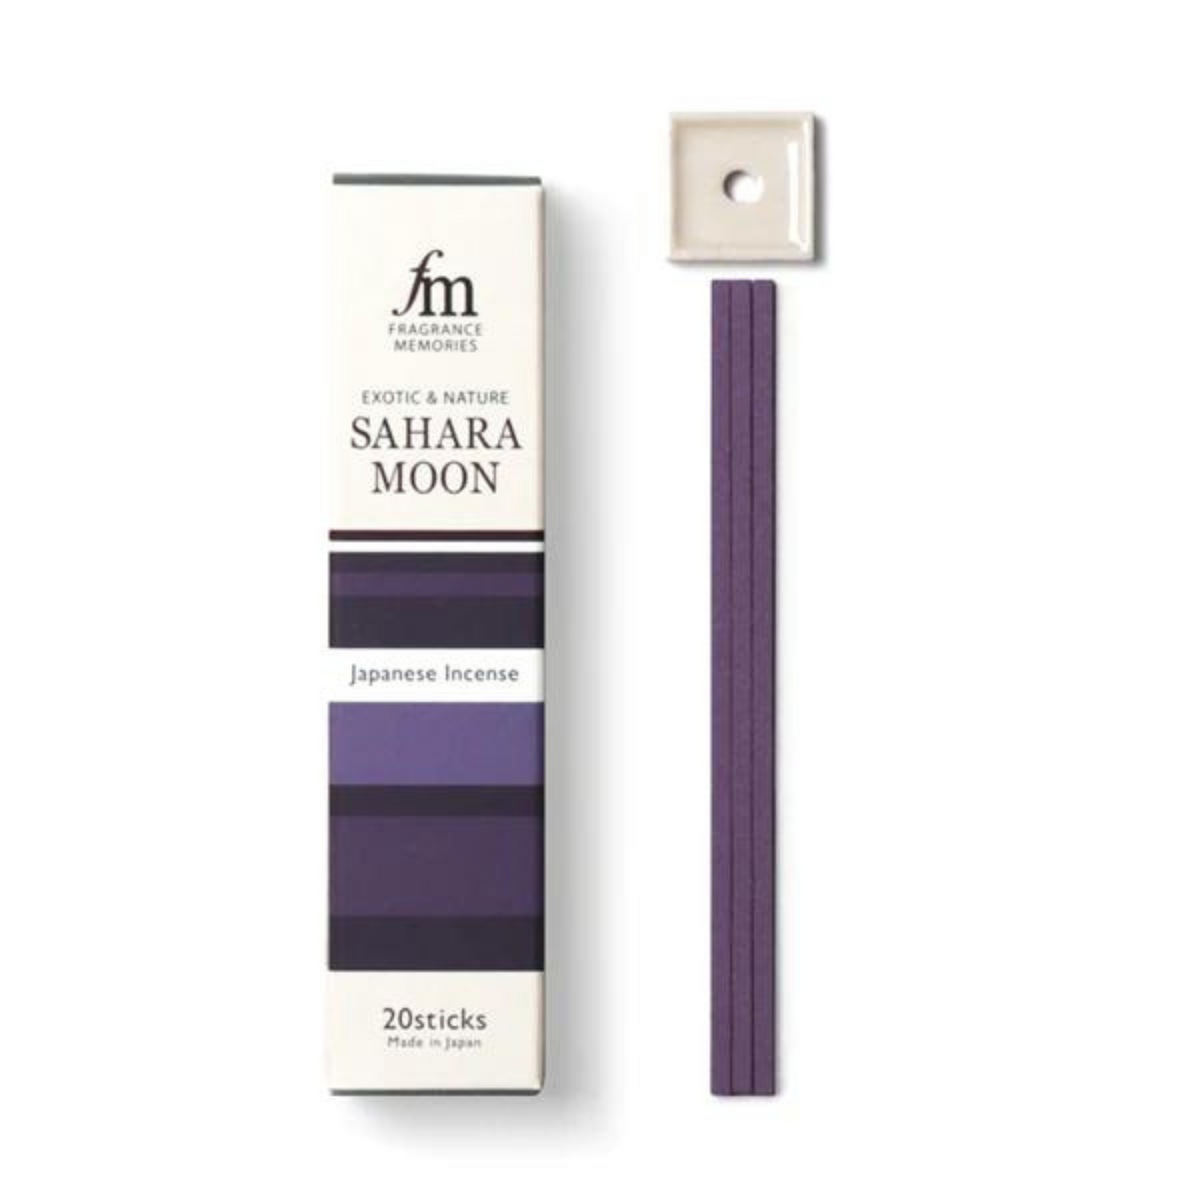 Primary image of Sahara Moon Incense Sticks